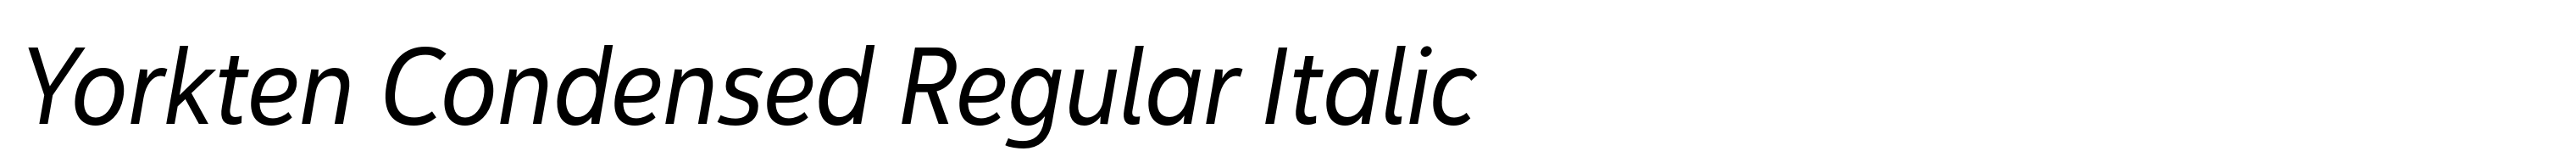 Yorkten Condensed Regular Italic